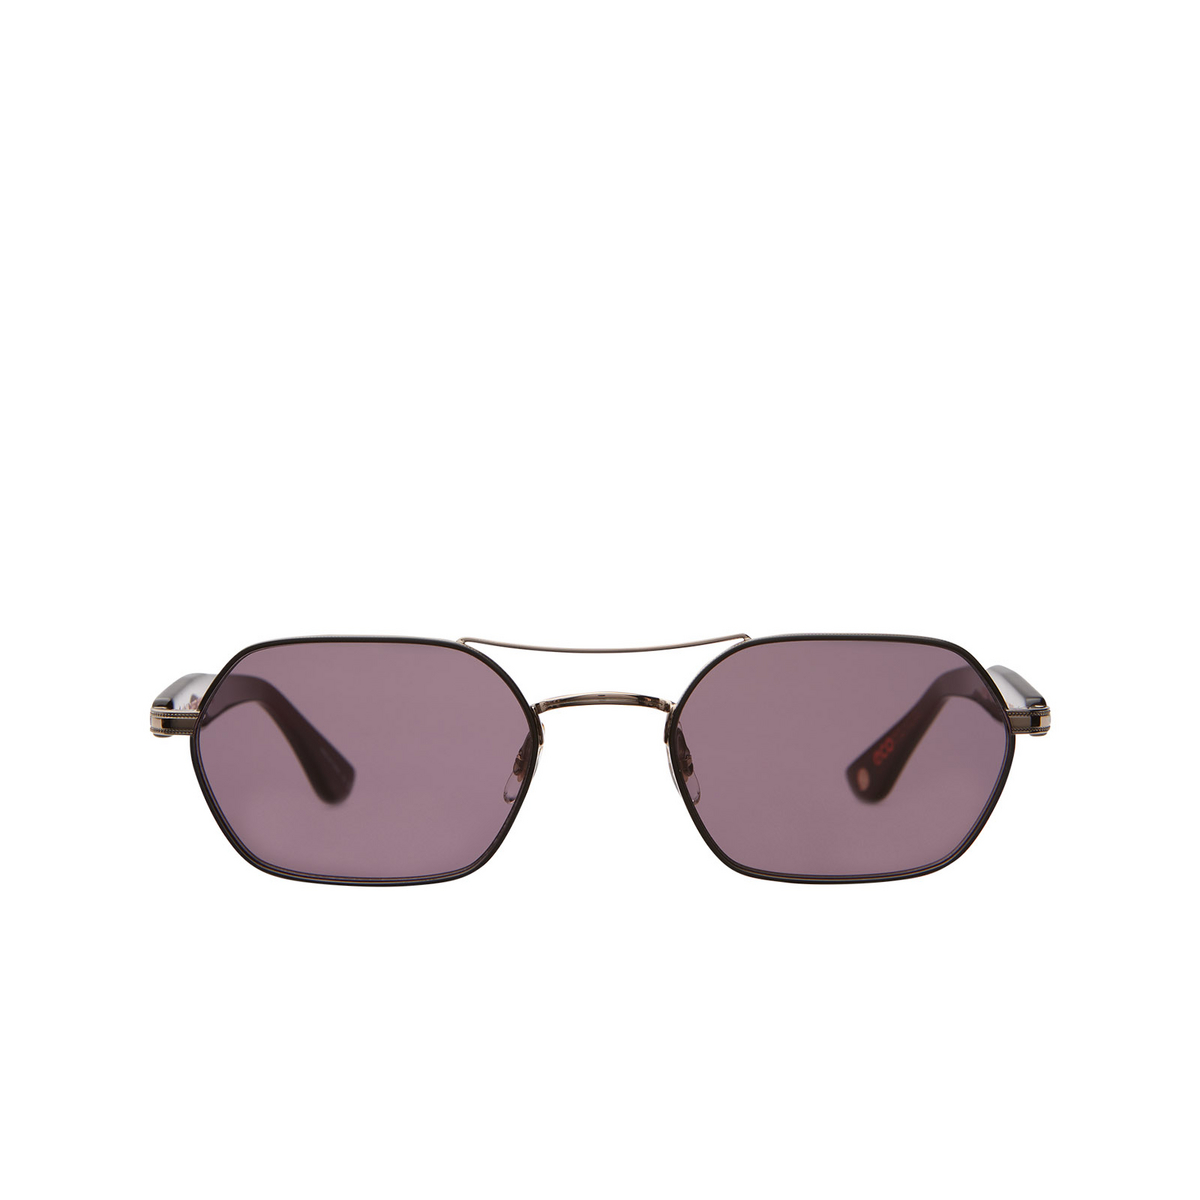 Garrett Leight GOLDIE Sunglasses CO-GM-BIO-BGY/VGY Copper - Gunmetal - Bio Burgundy - front view